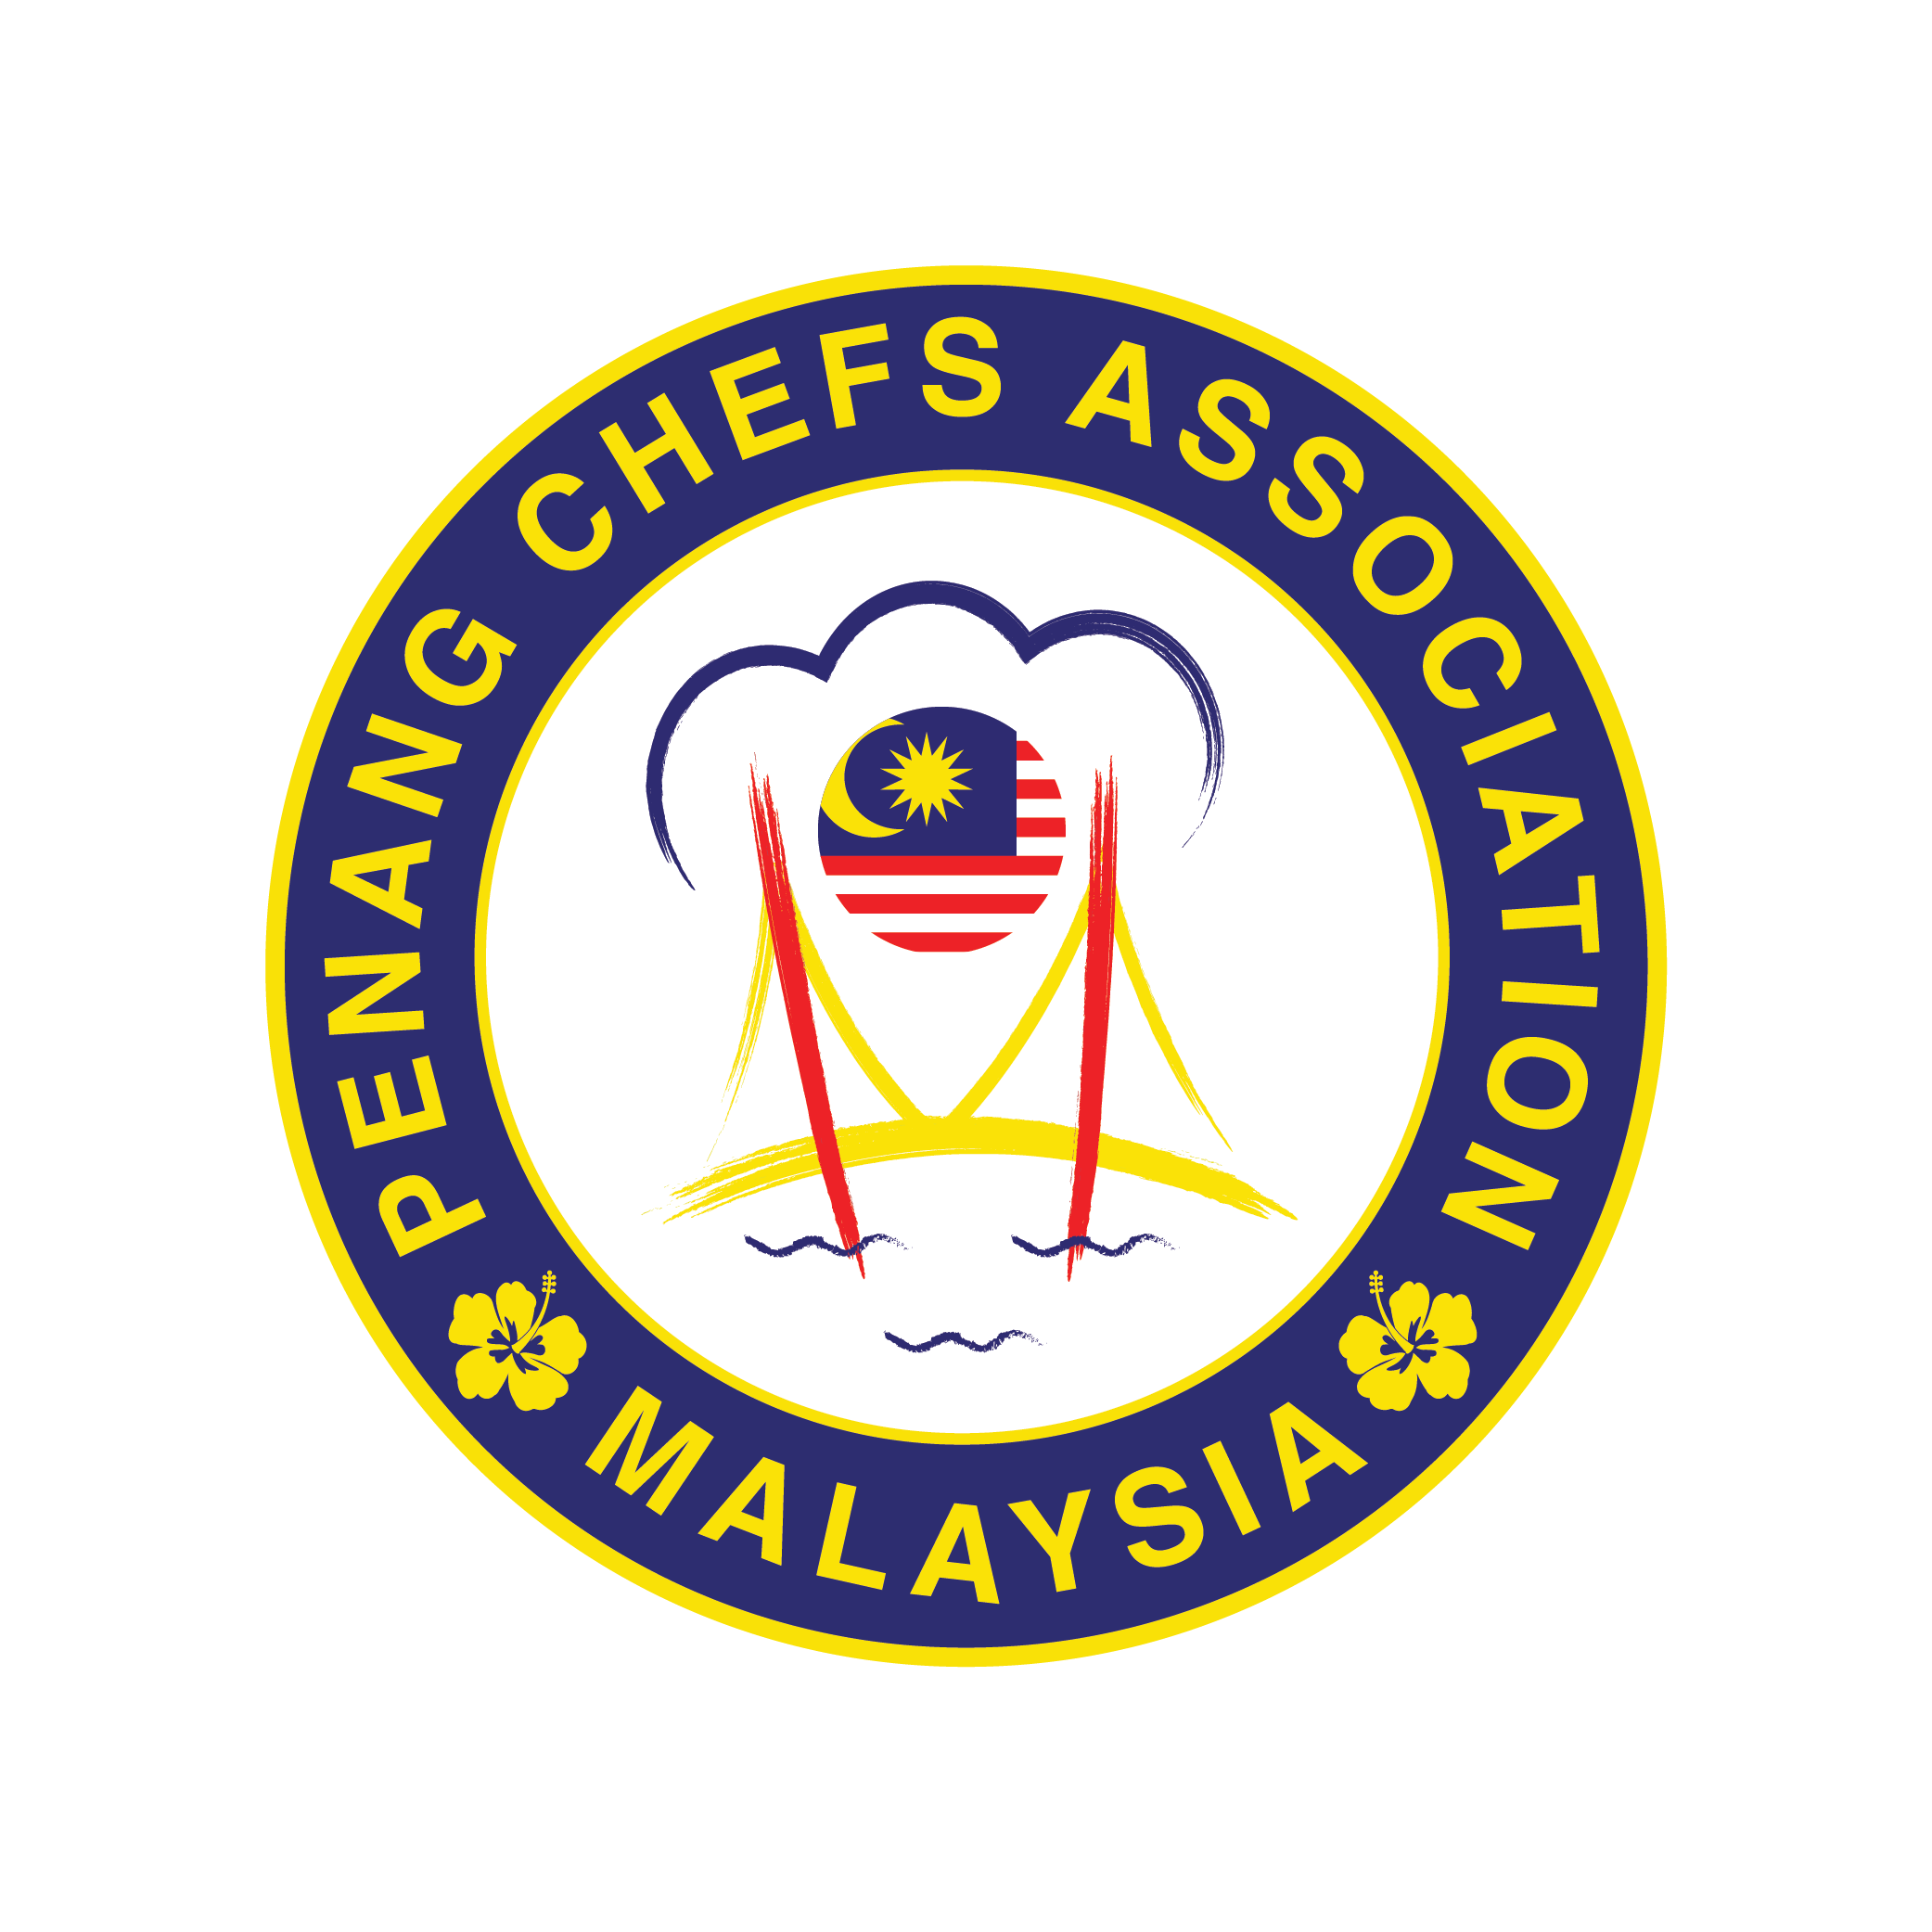 penang_chefs_association